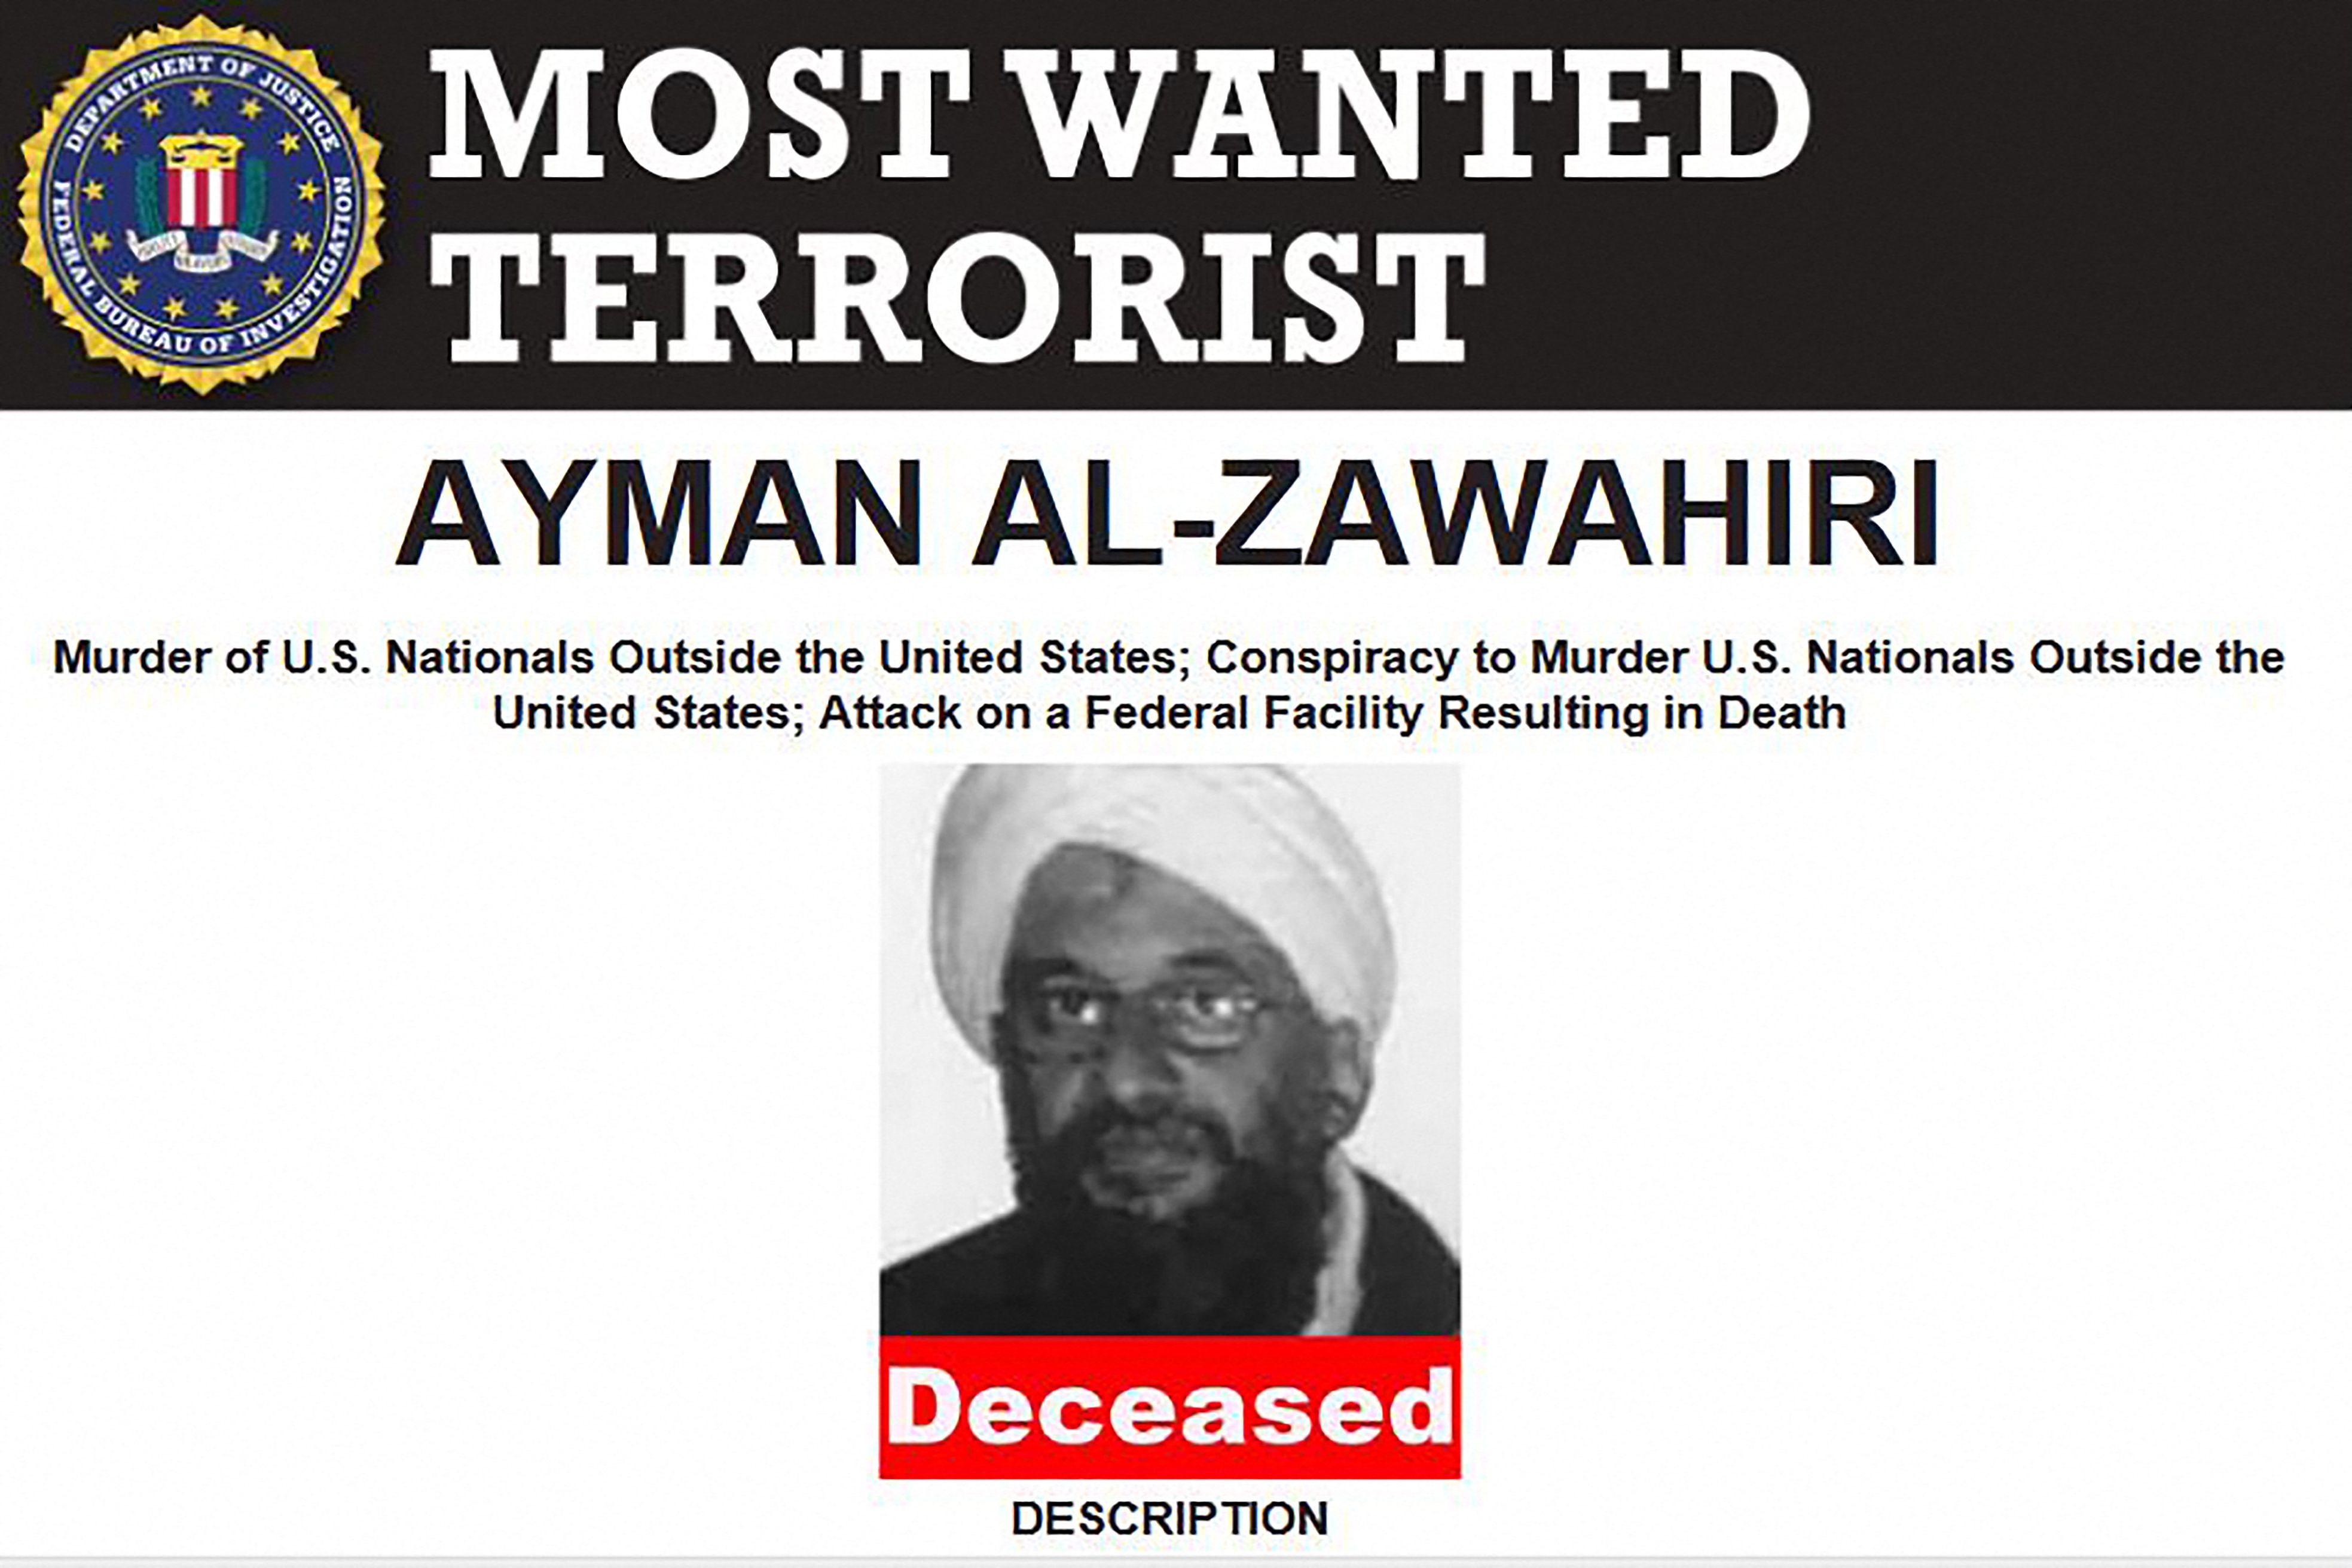 President Joe Biden announced the death of Ayman al-Zawahiri on Monday